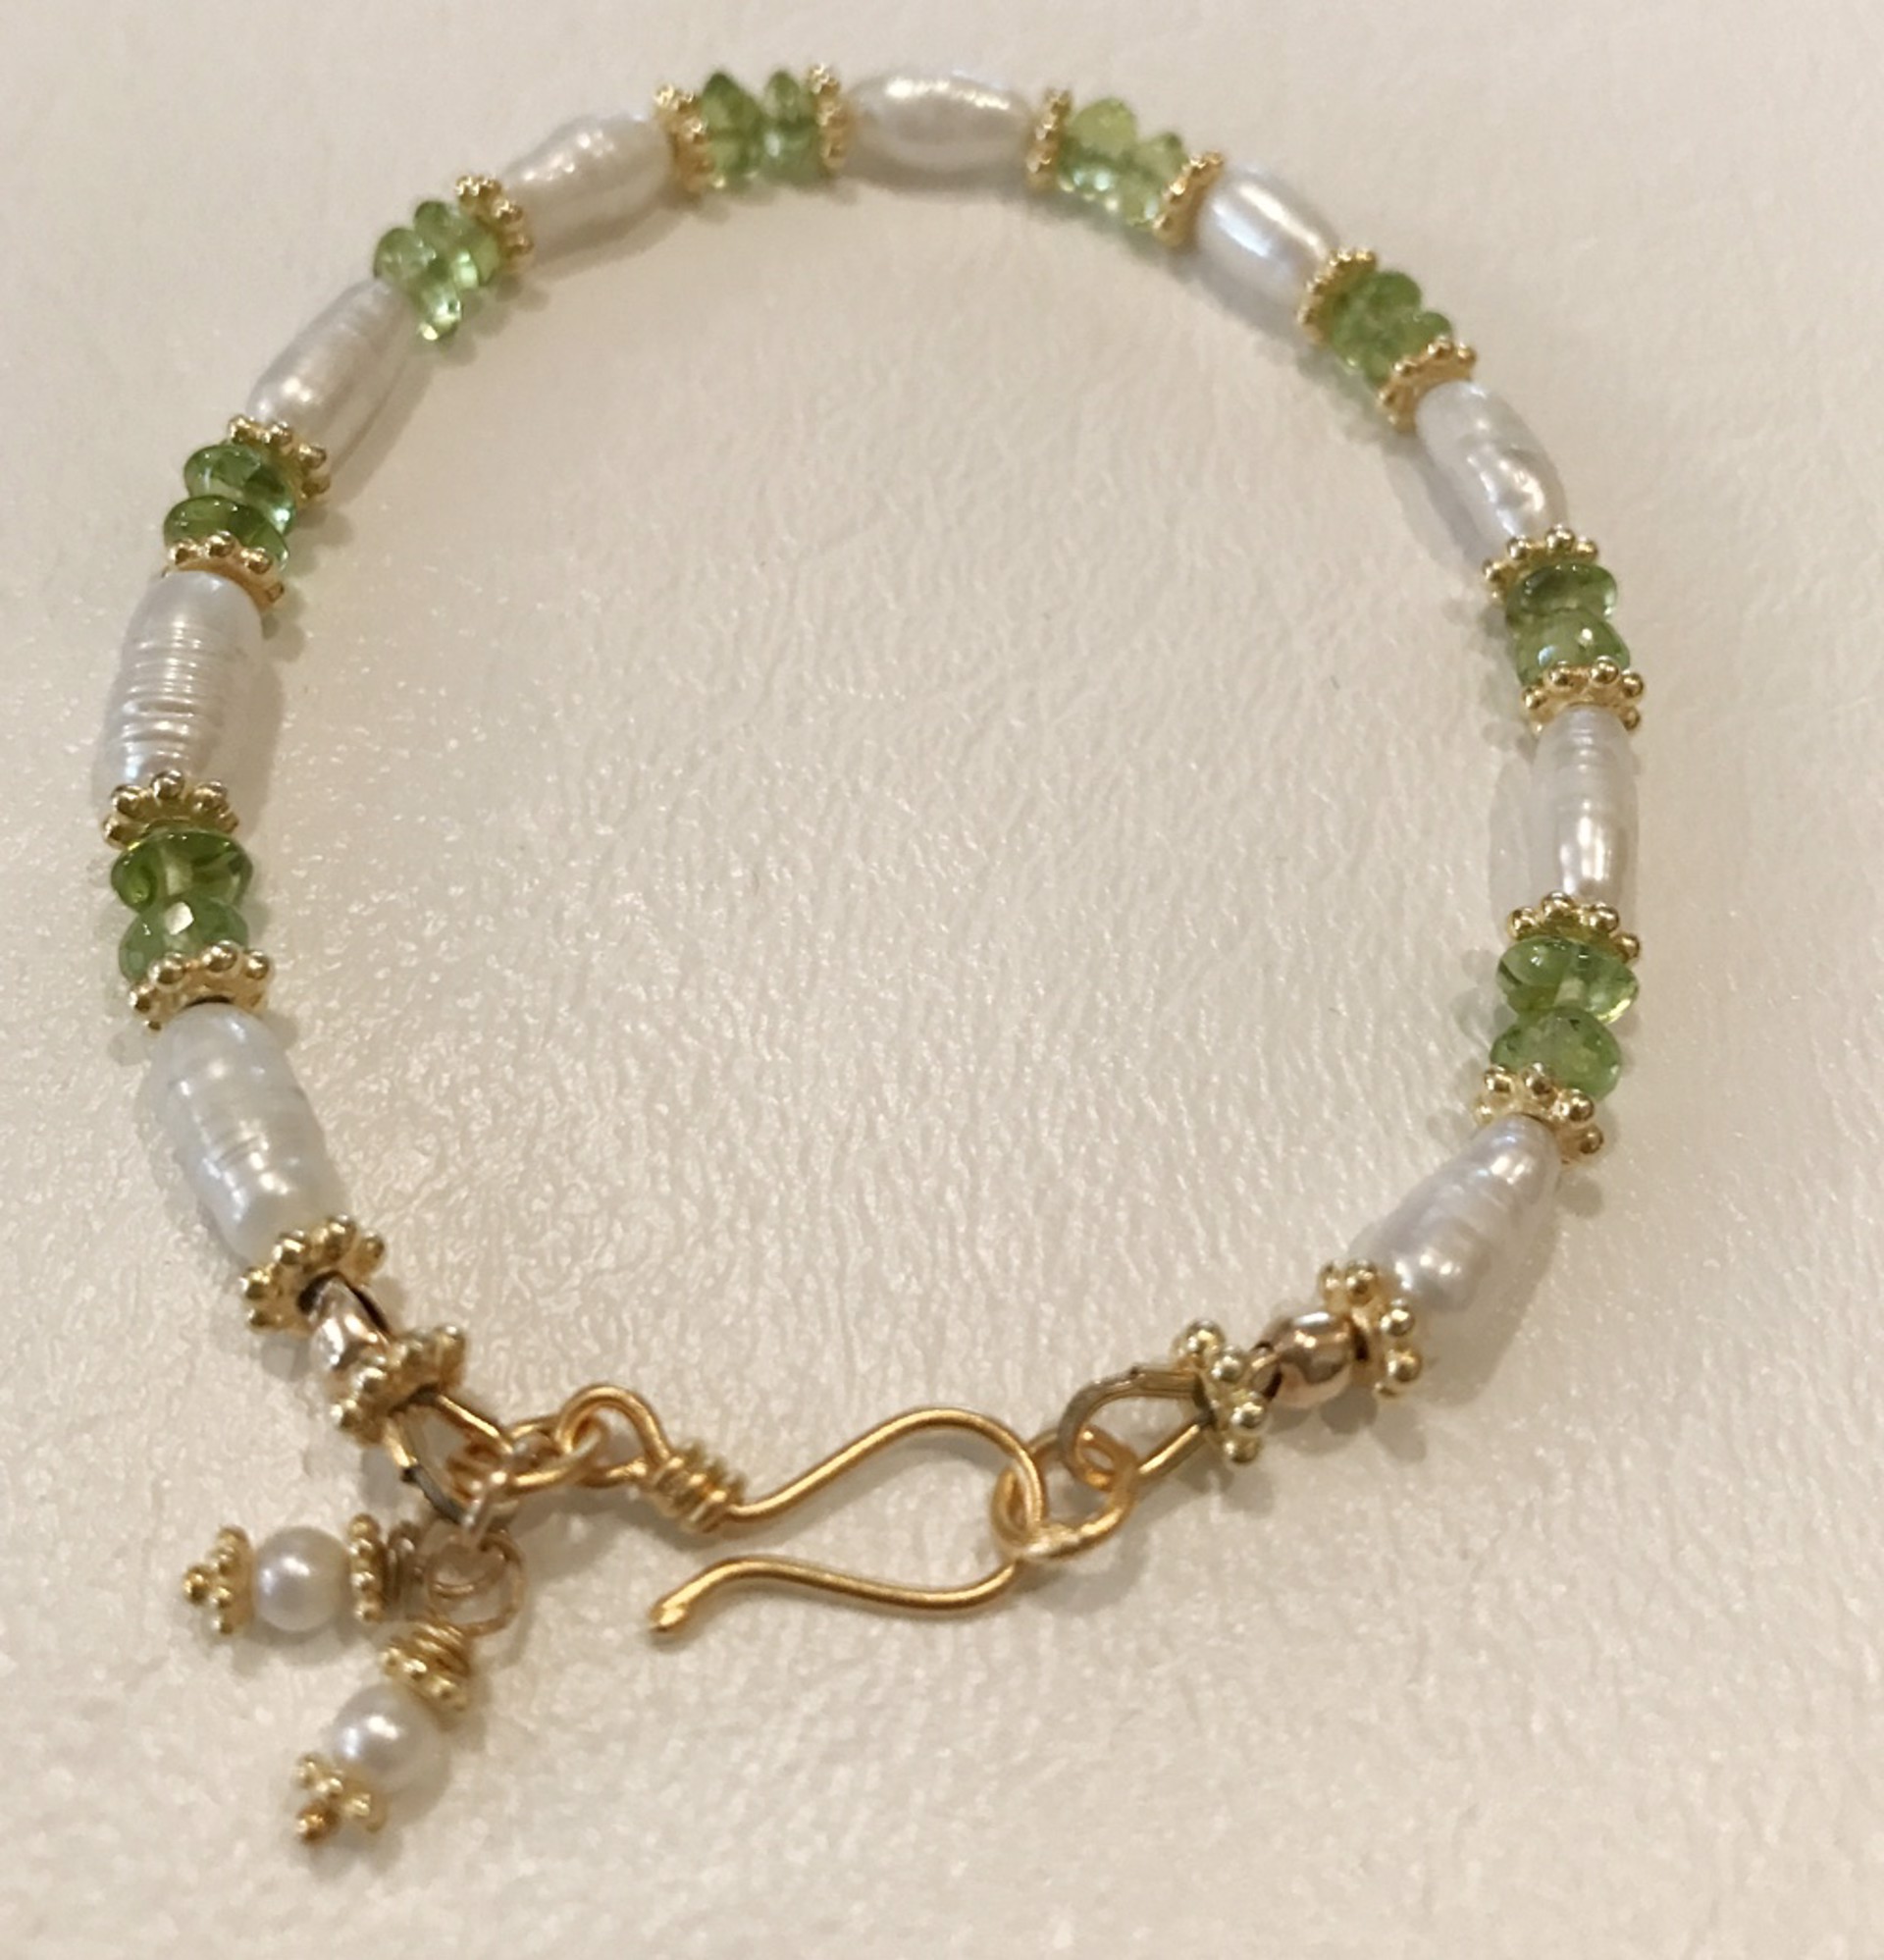 Bracelet - Freshwater Pearl & Peridot  #7778 by Bonnie Jaus